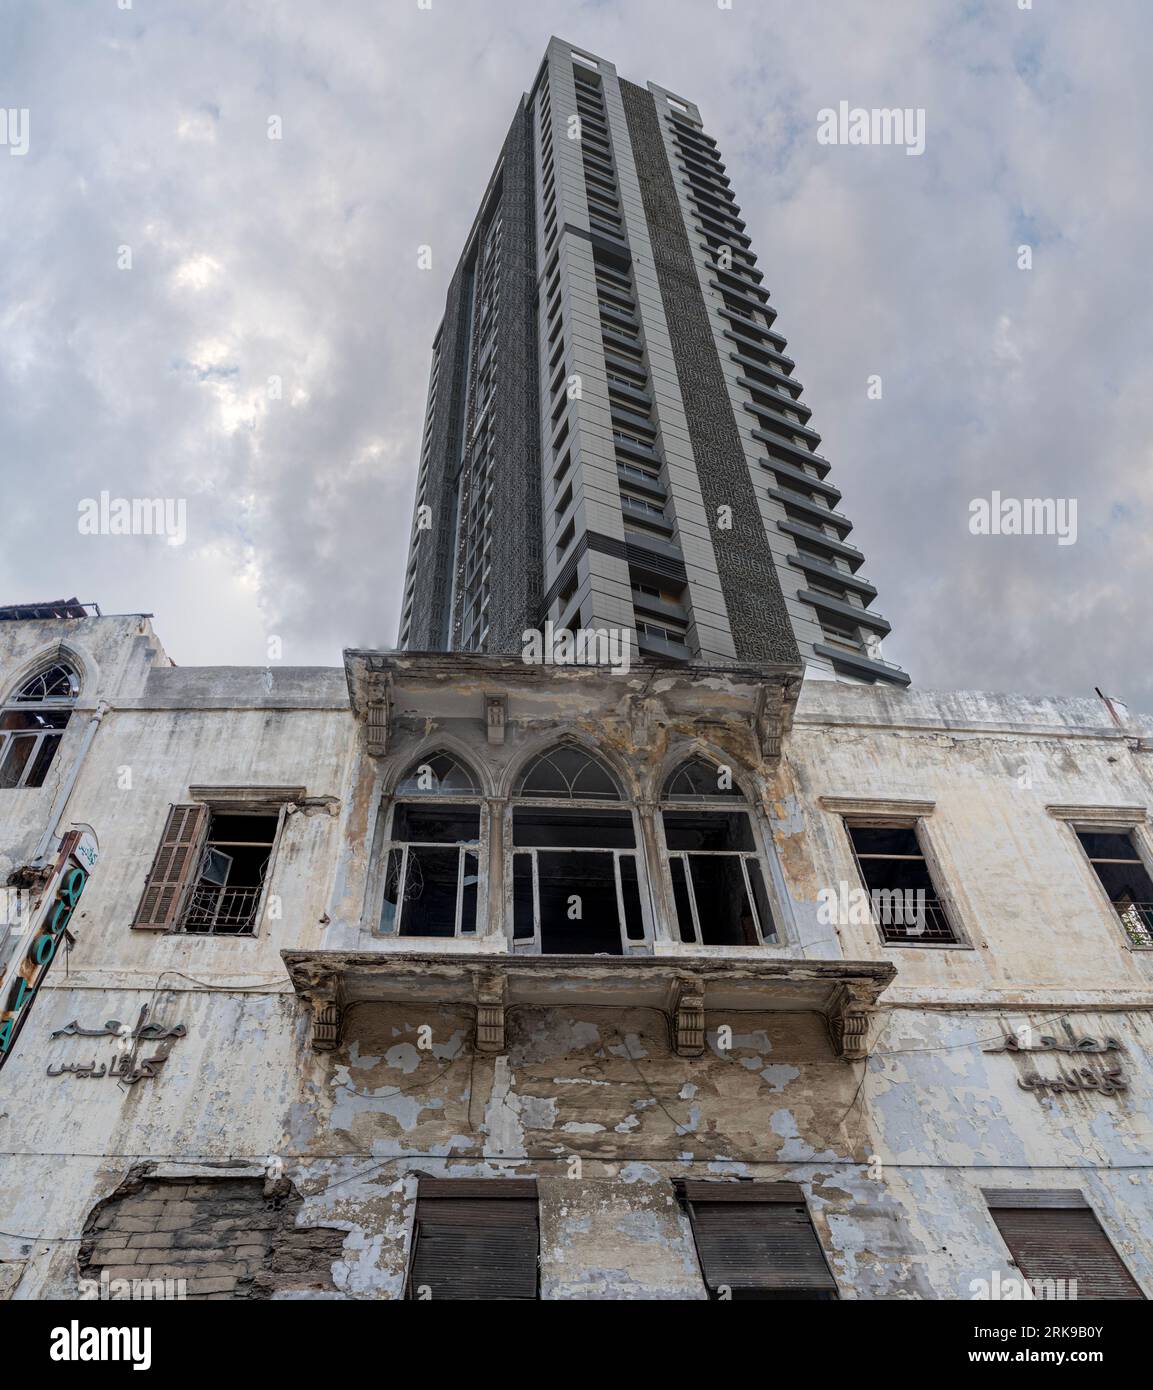 Lebanese Civil War shell and bullet damage to Holiday Inn Hotel Stock Photo